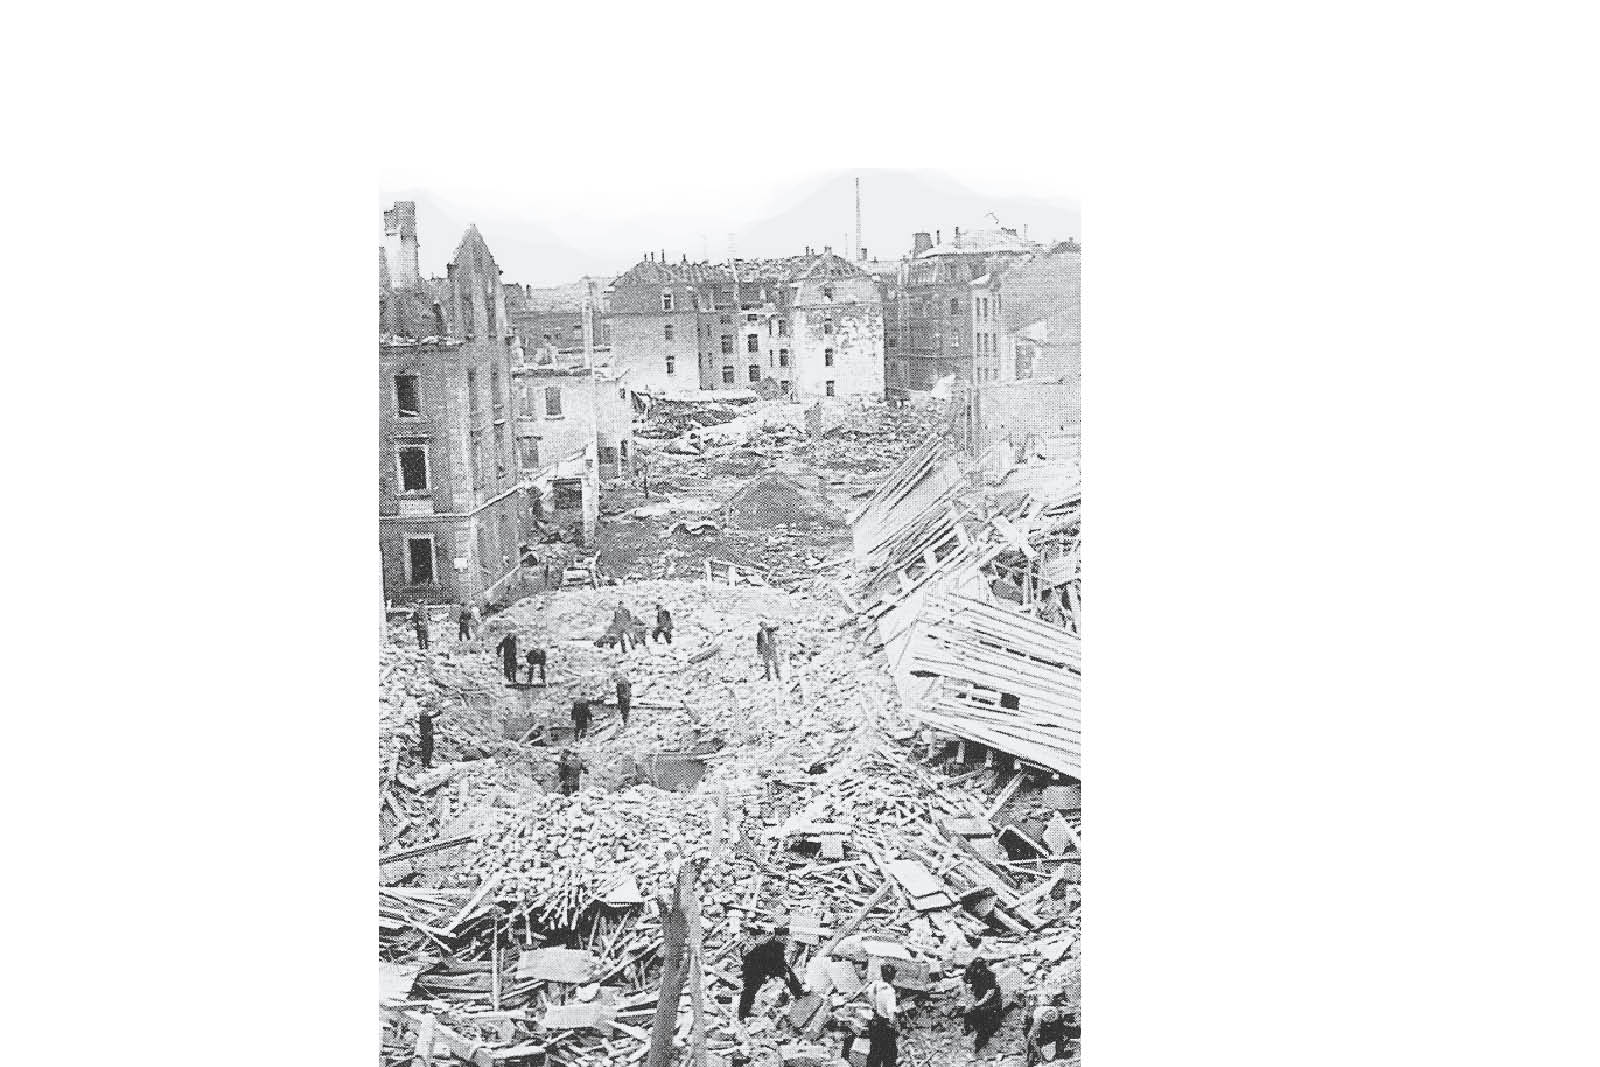 Adamstraße 1942 nach dem Bombenangriff